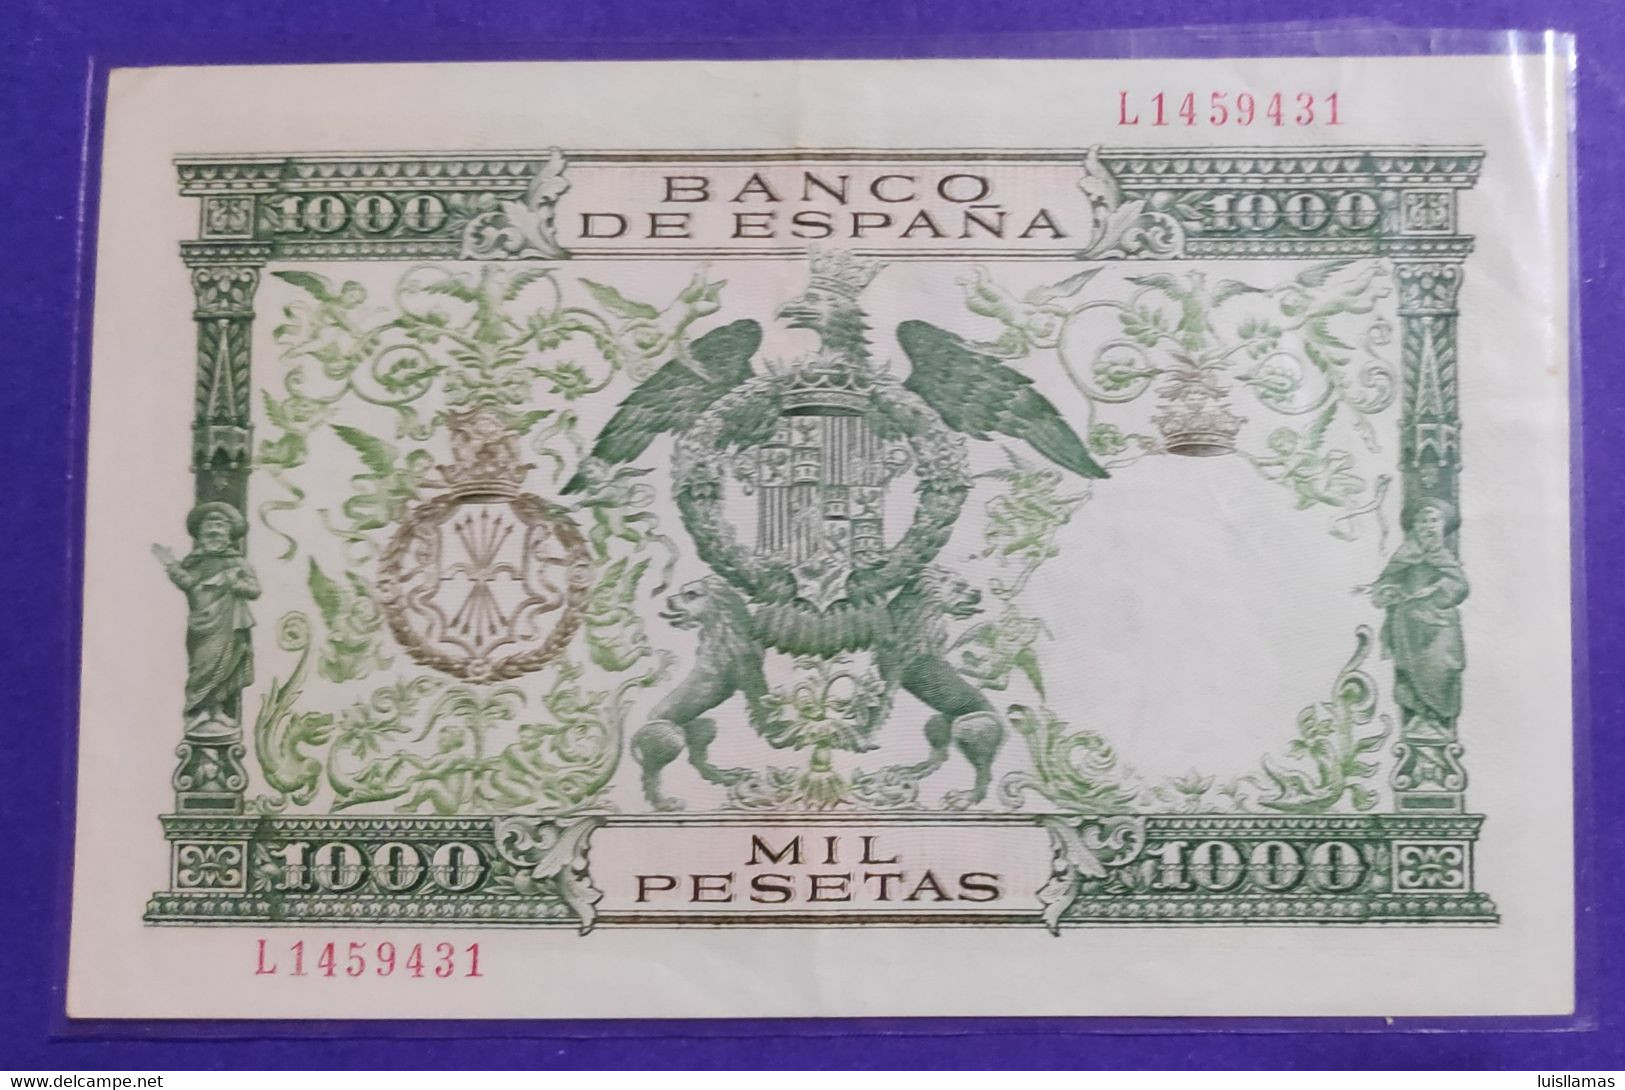 España 1957 Billete De 1000 Pesetas, Reyes Católicos, MBC - 1000 Pesetas